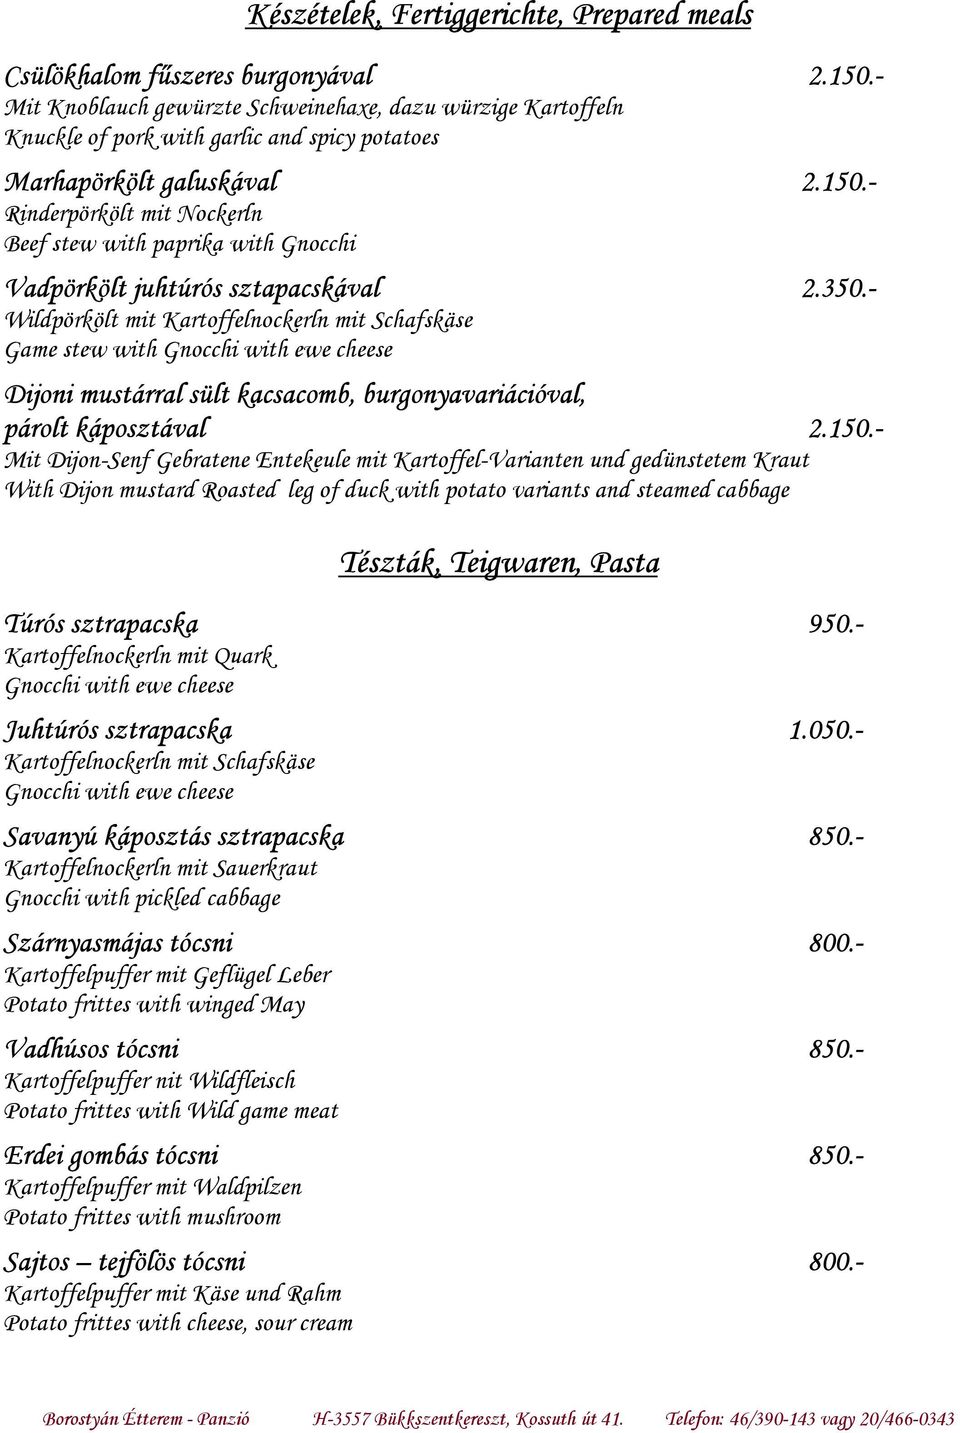 - Rinderpörkölt mit Nockerln Beef stew with paprika with Gnocchi Vadpörkölt juhtúrós sztapacskával 2.350.